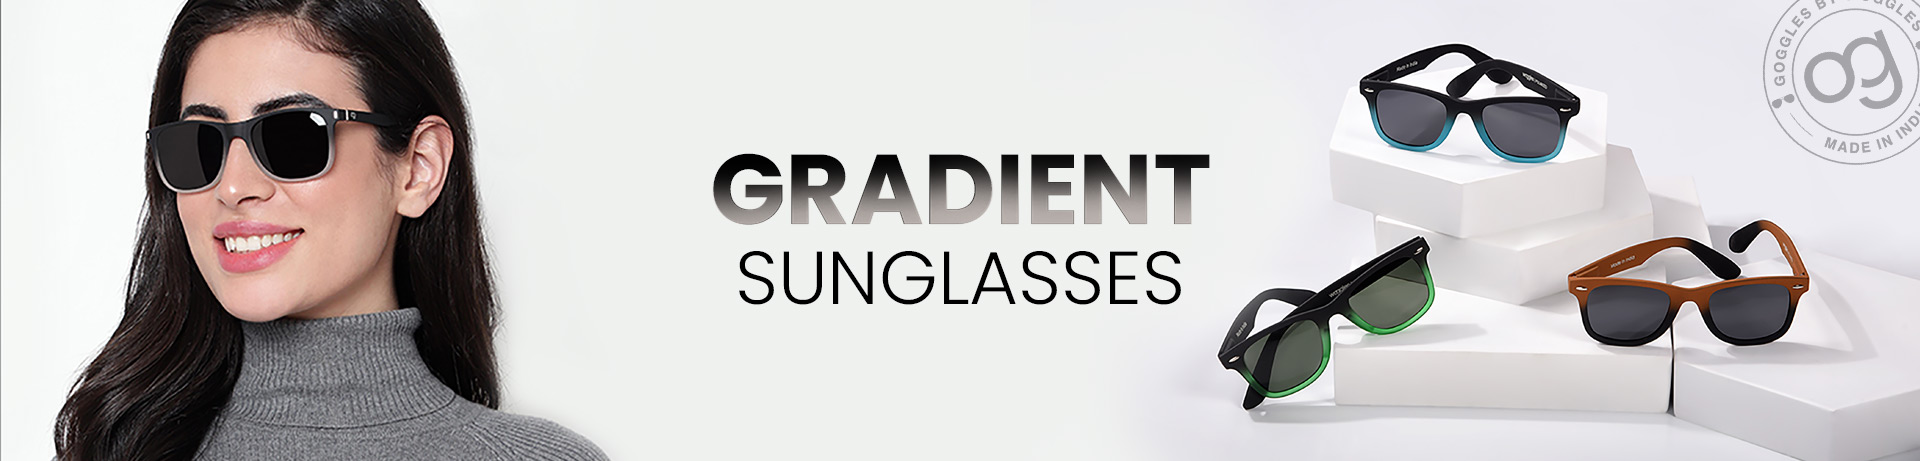 Gradient Sunglasses for Women